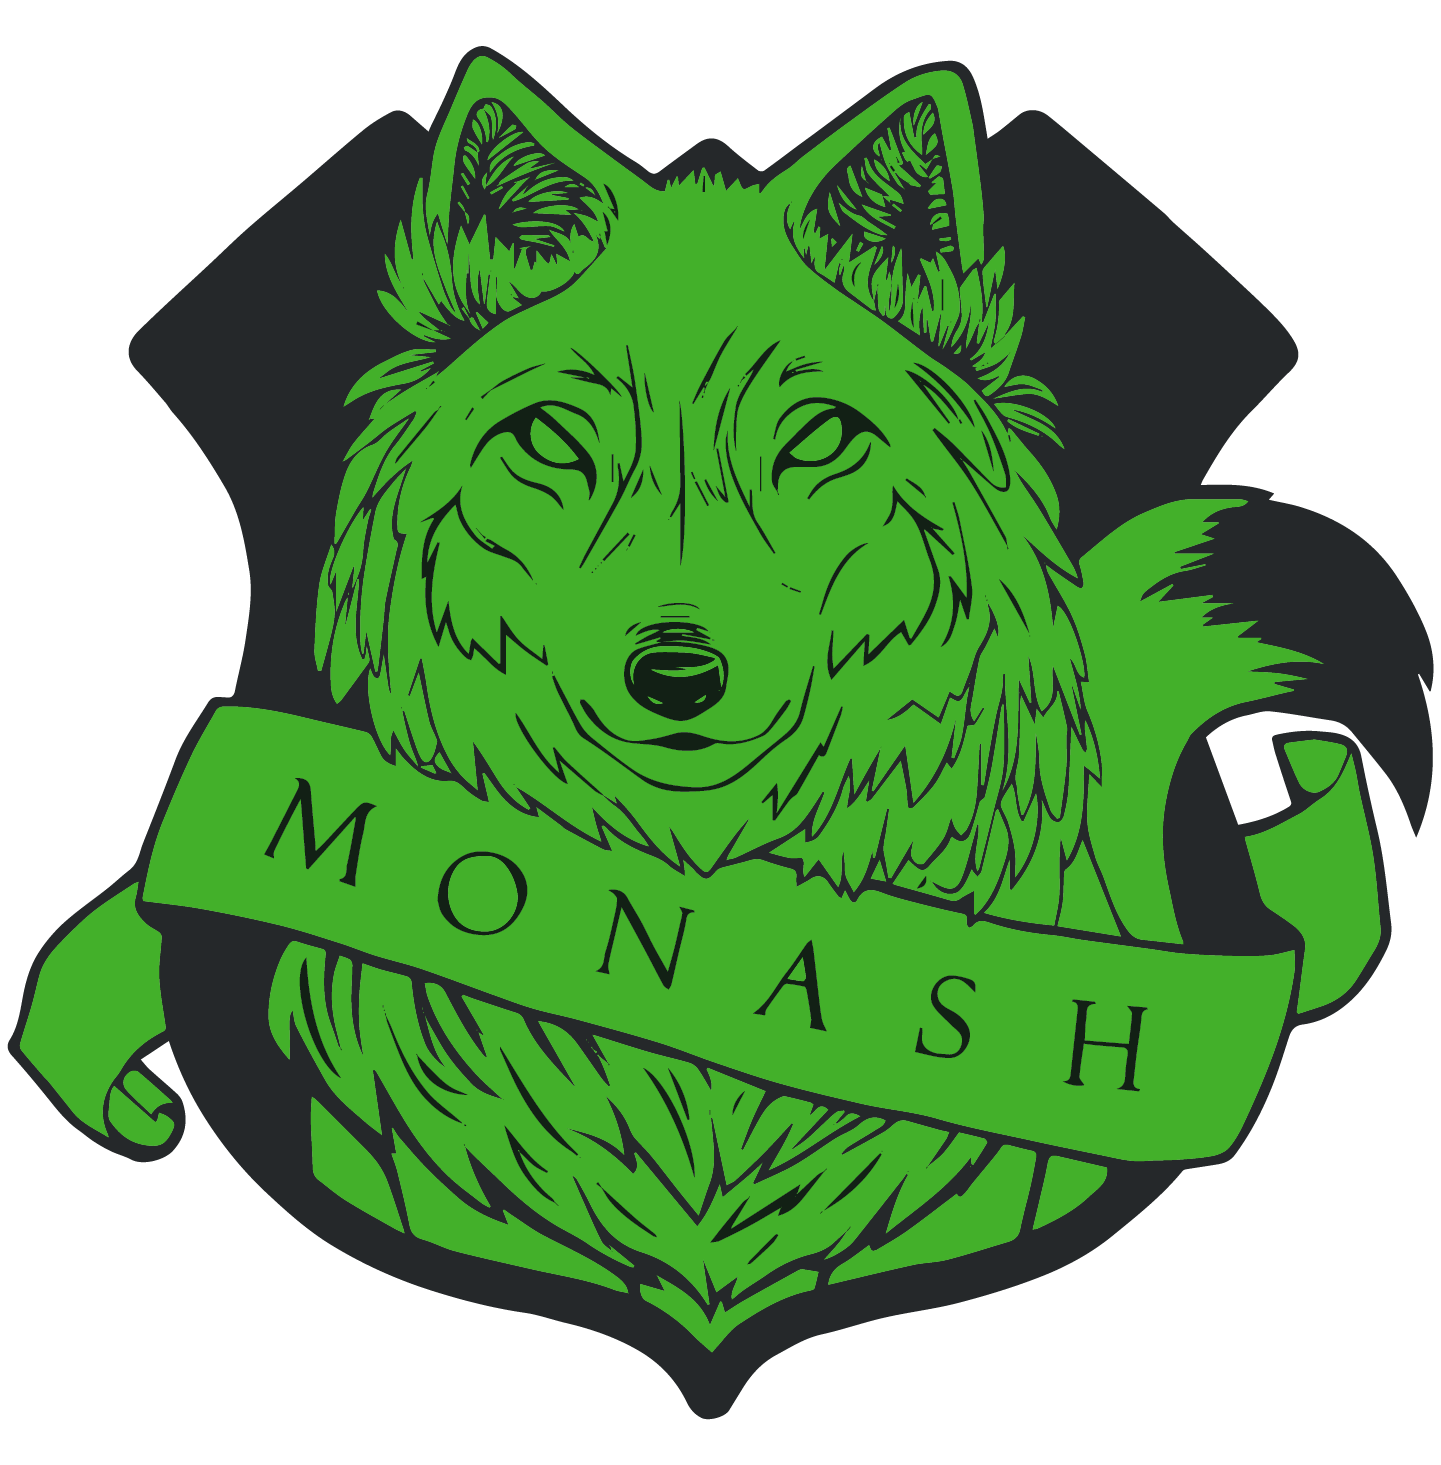 Monash emblem